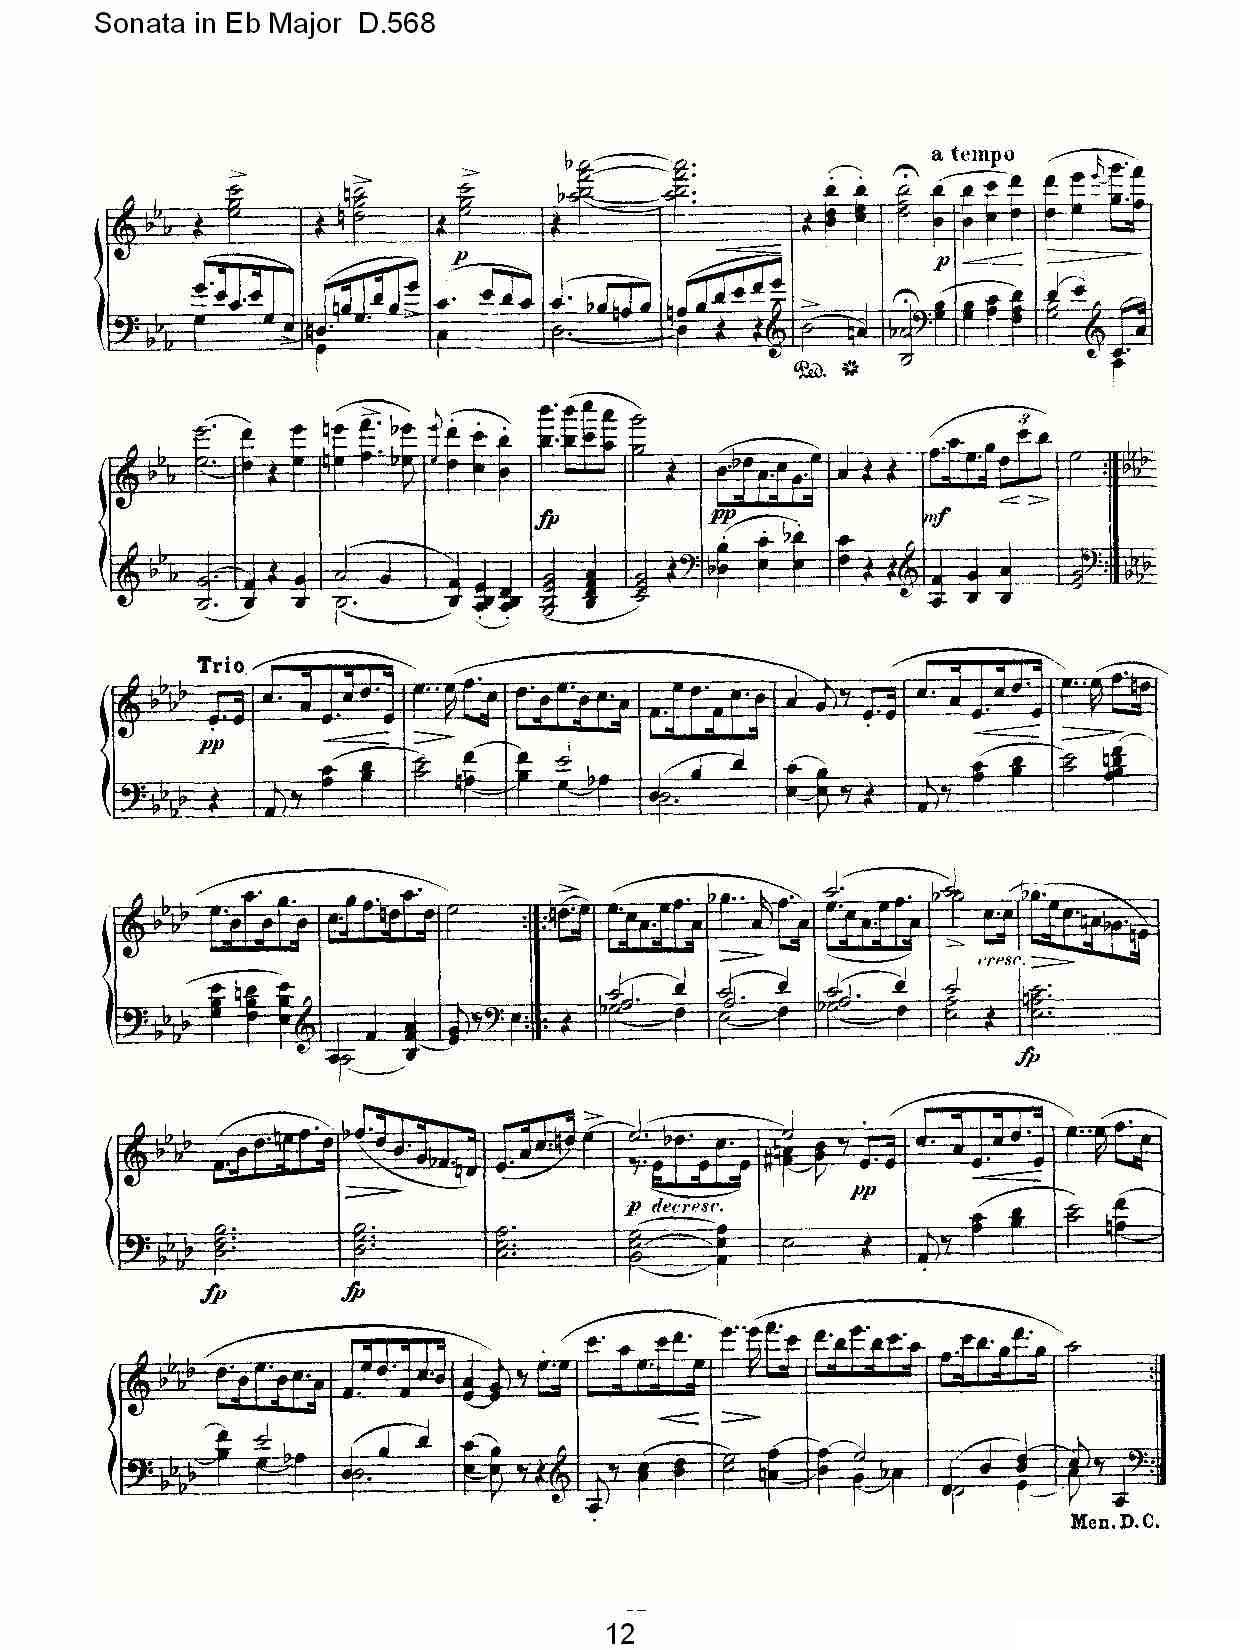 Sonata in Eb Major D.568（Eb大调奏鸣曲 D.568）钢琴曲谱（图12）